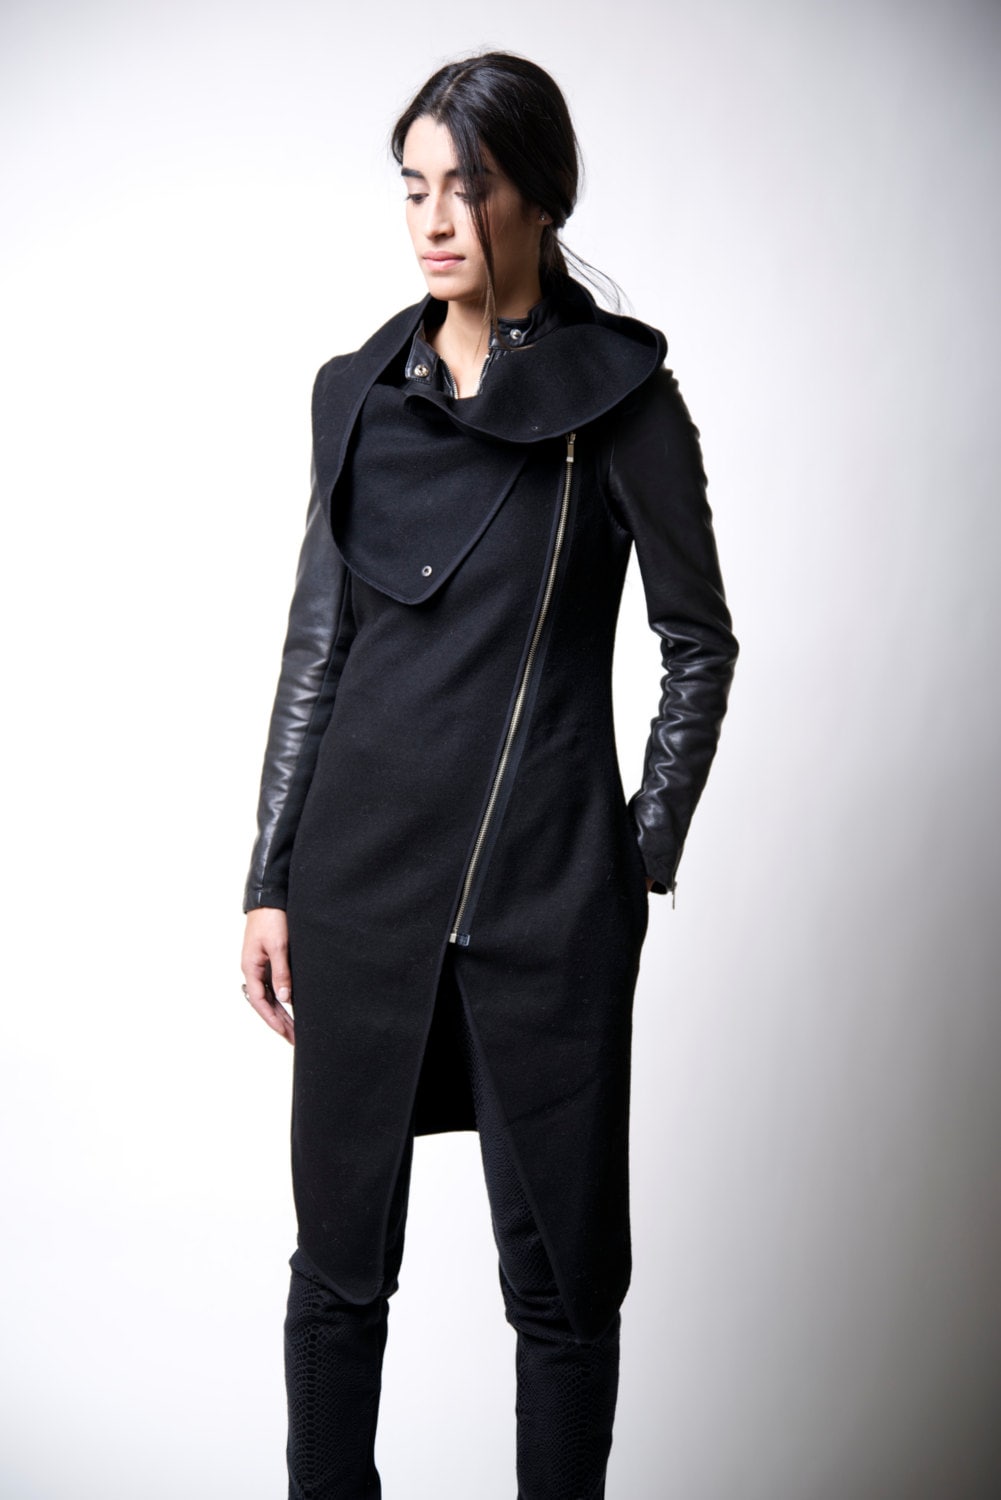 Black Vest / Asymmetrical Vest with Zipper / Wool Sleeveless | Etsy